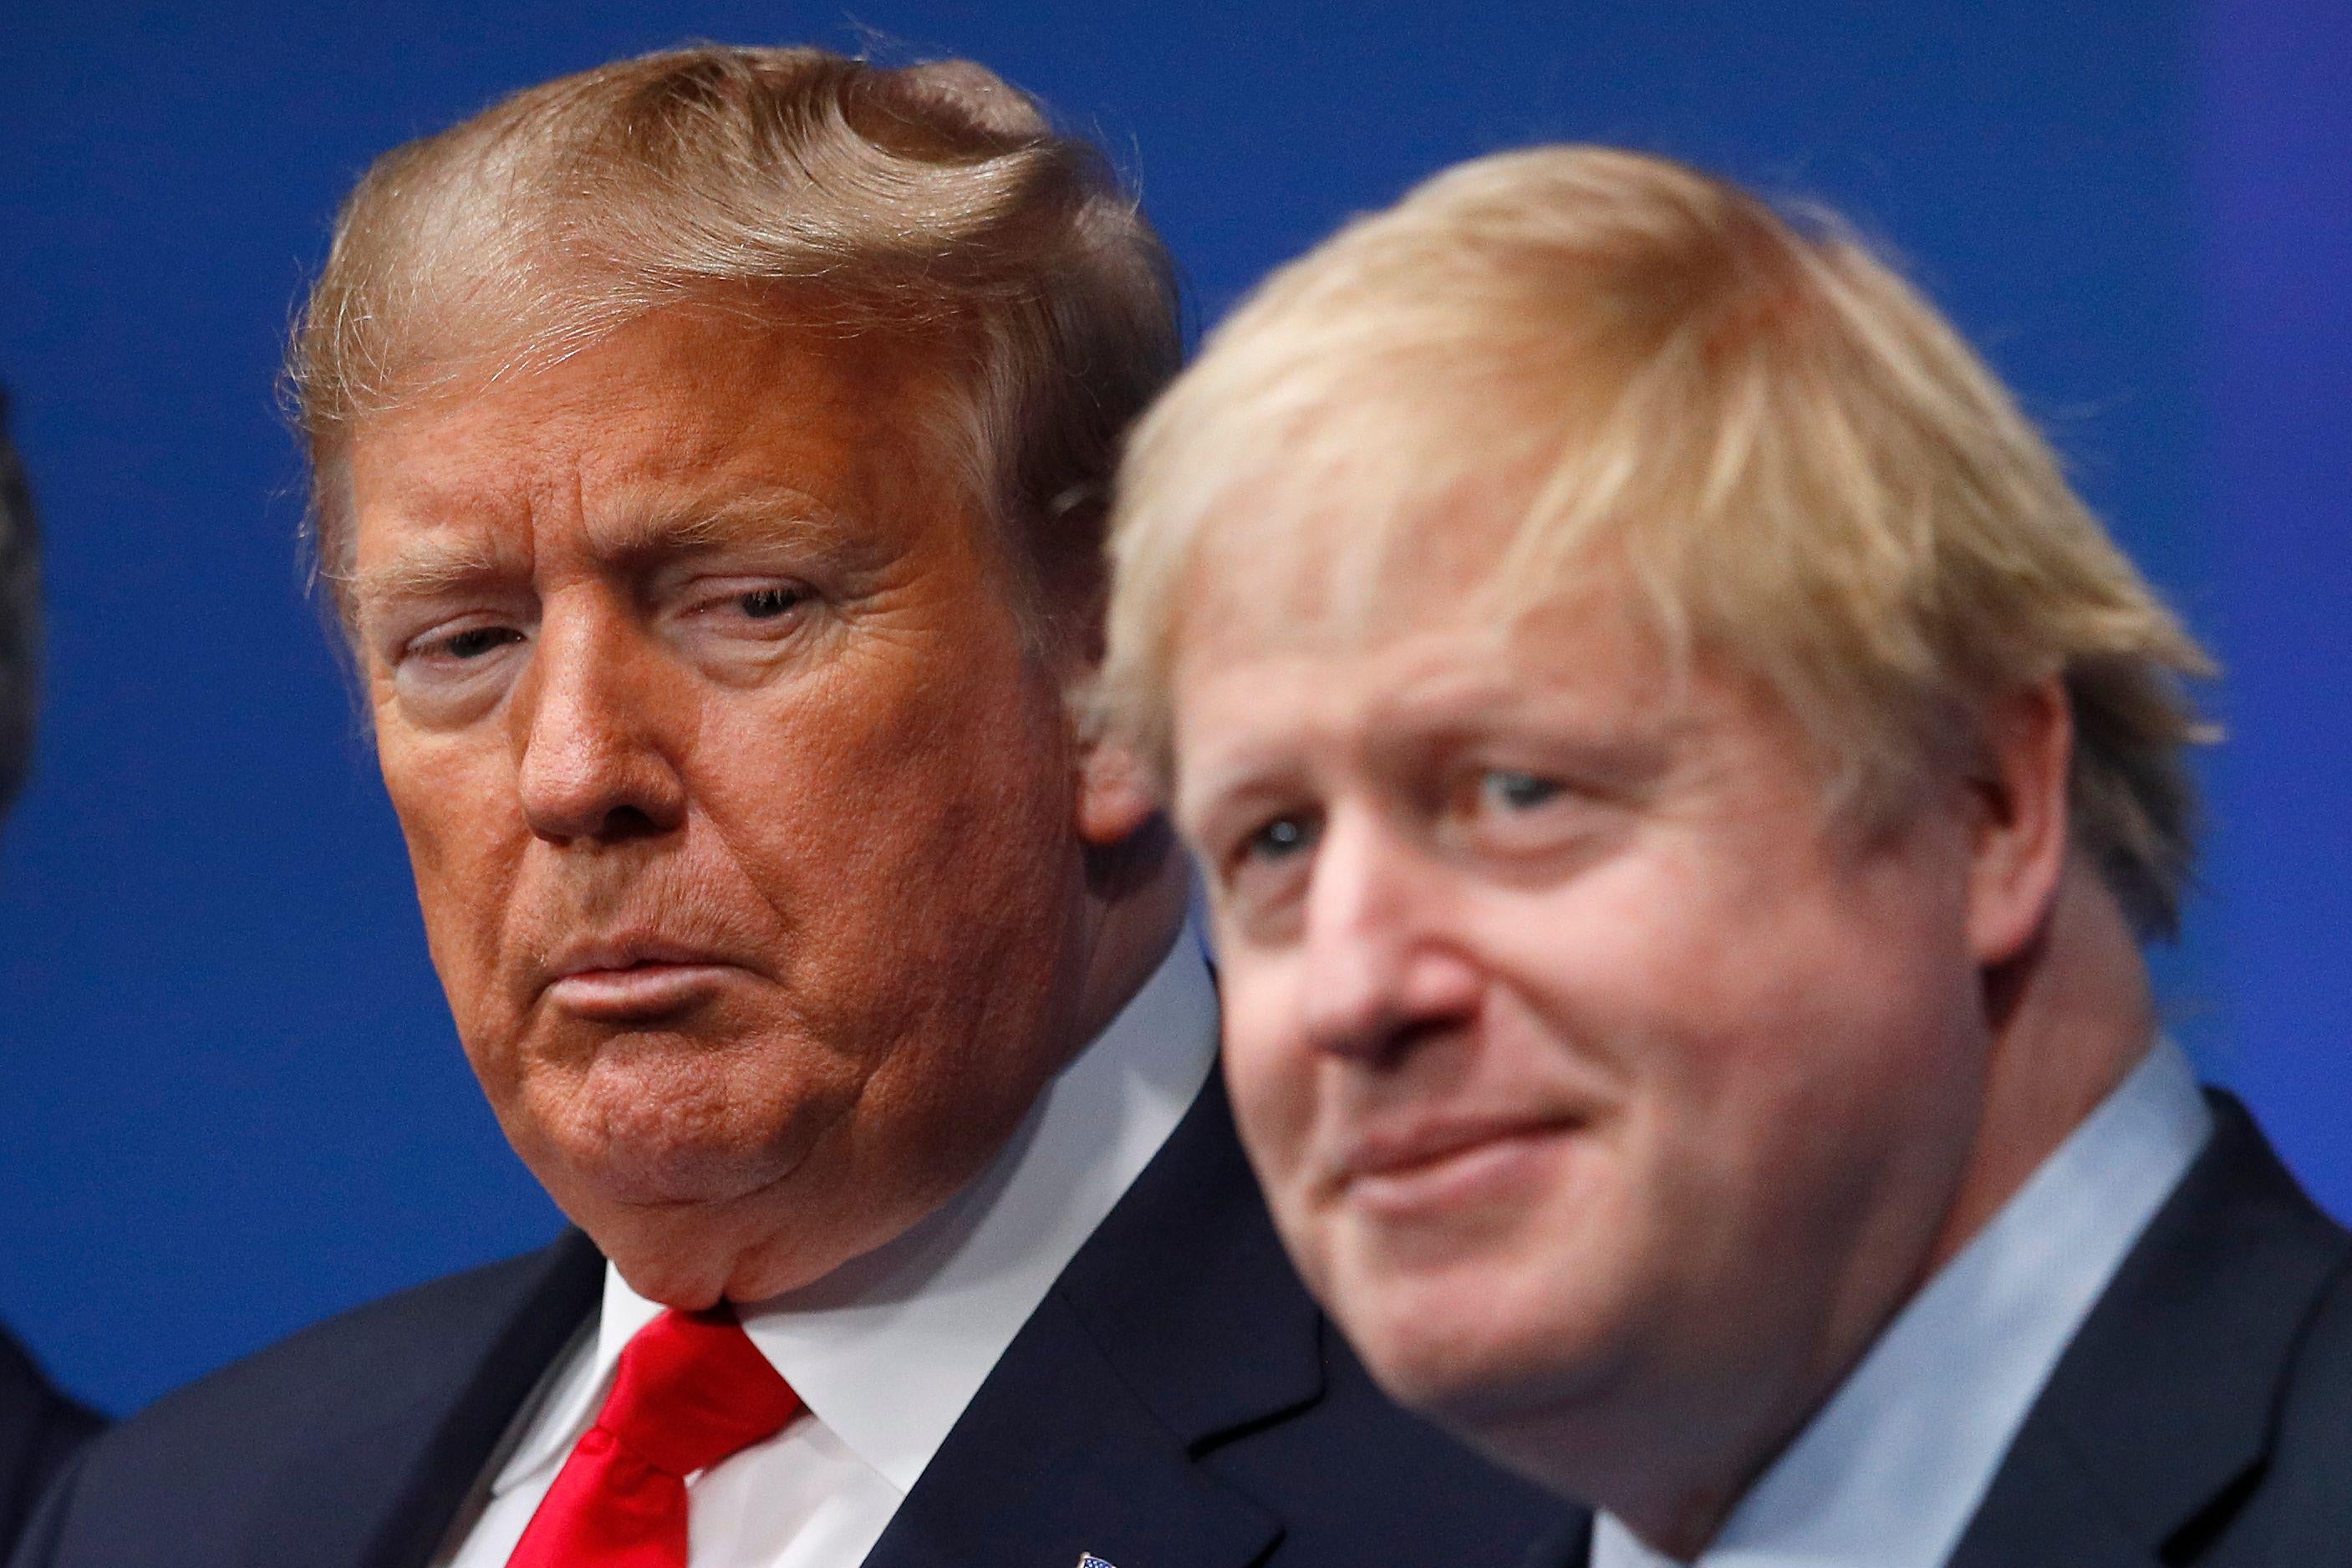 President Donald Trump makes a face while looking at British Prime Minister Boris Johnson.